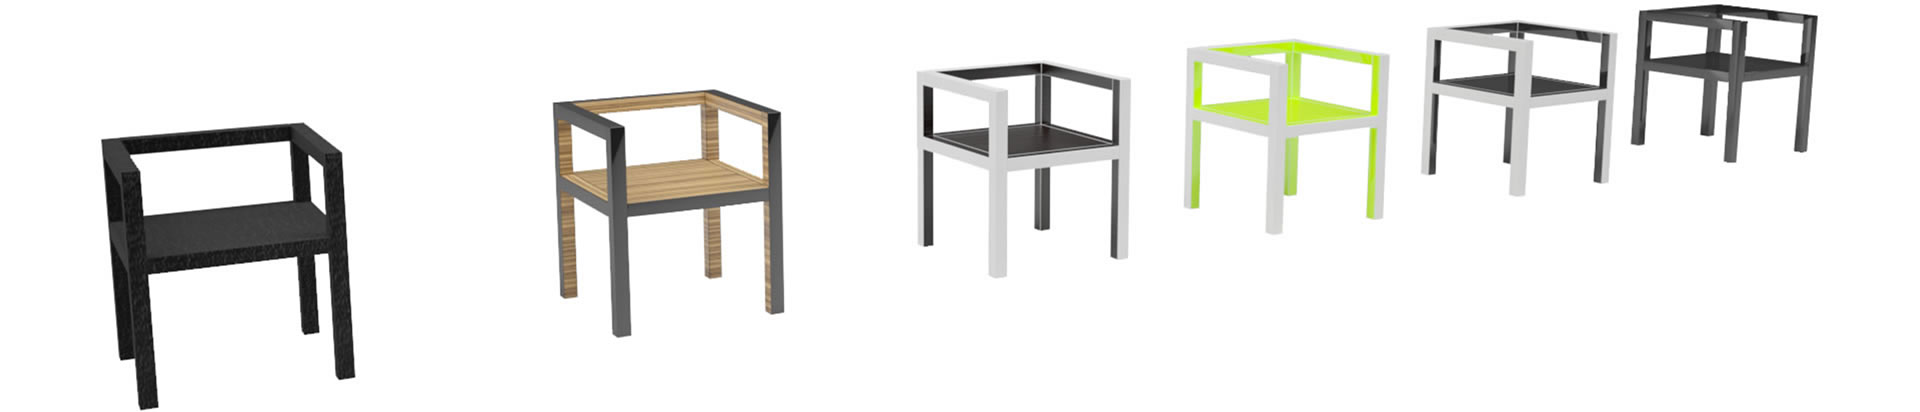 stuhl quadrum lounge rechteckig minimal design weiss modern lack hochglanz quadratisch designmoebel rechteck 4